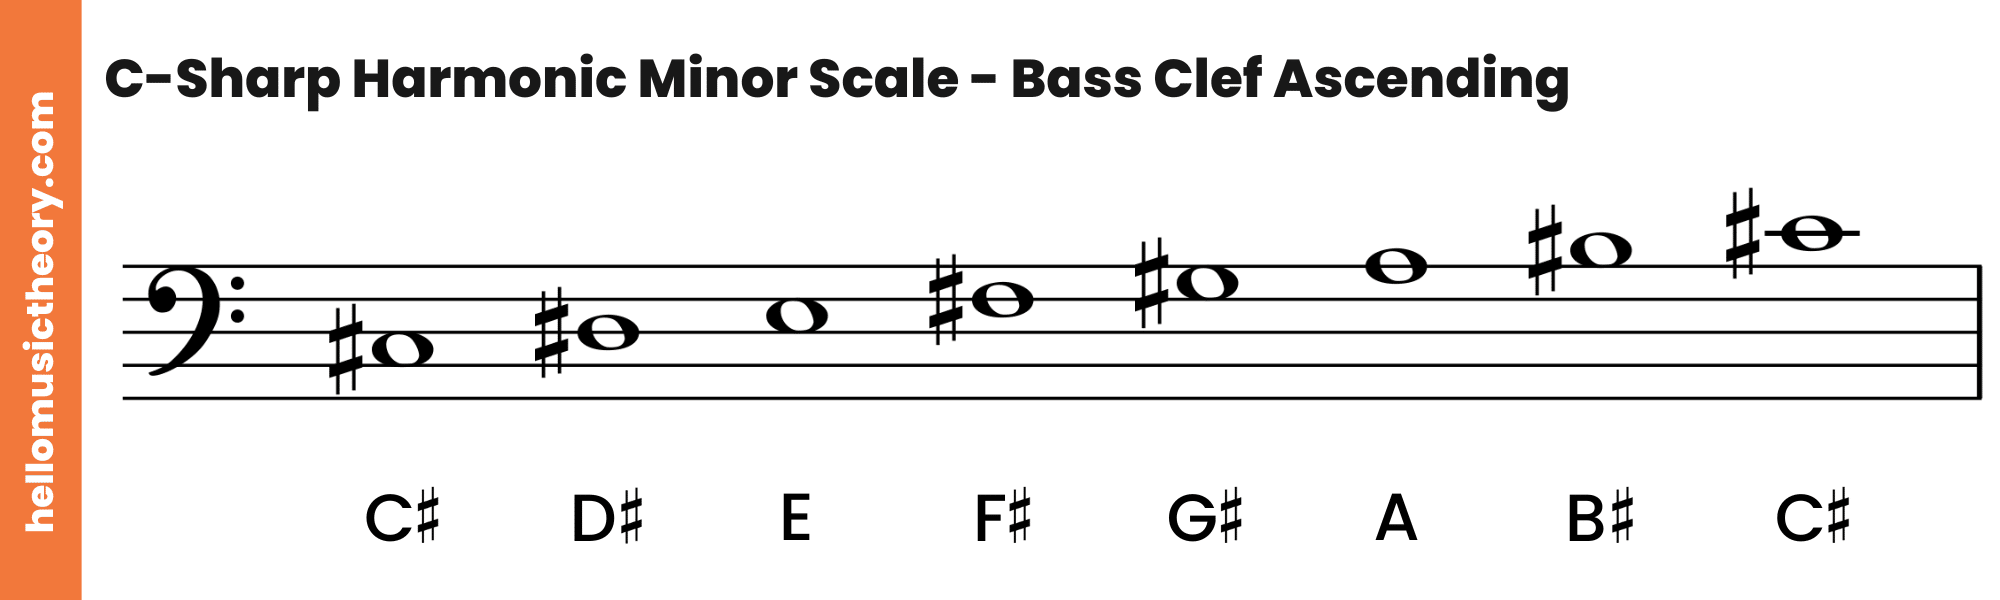 C-Sharp Harmonic Minor Scale Bass Clef Ascending